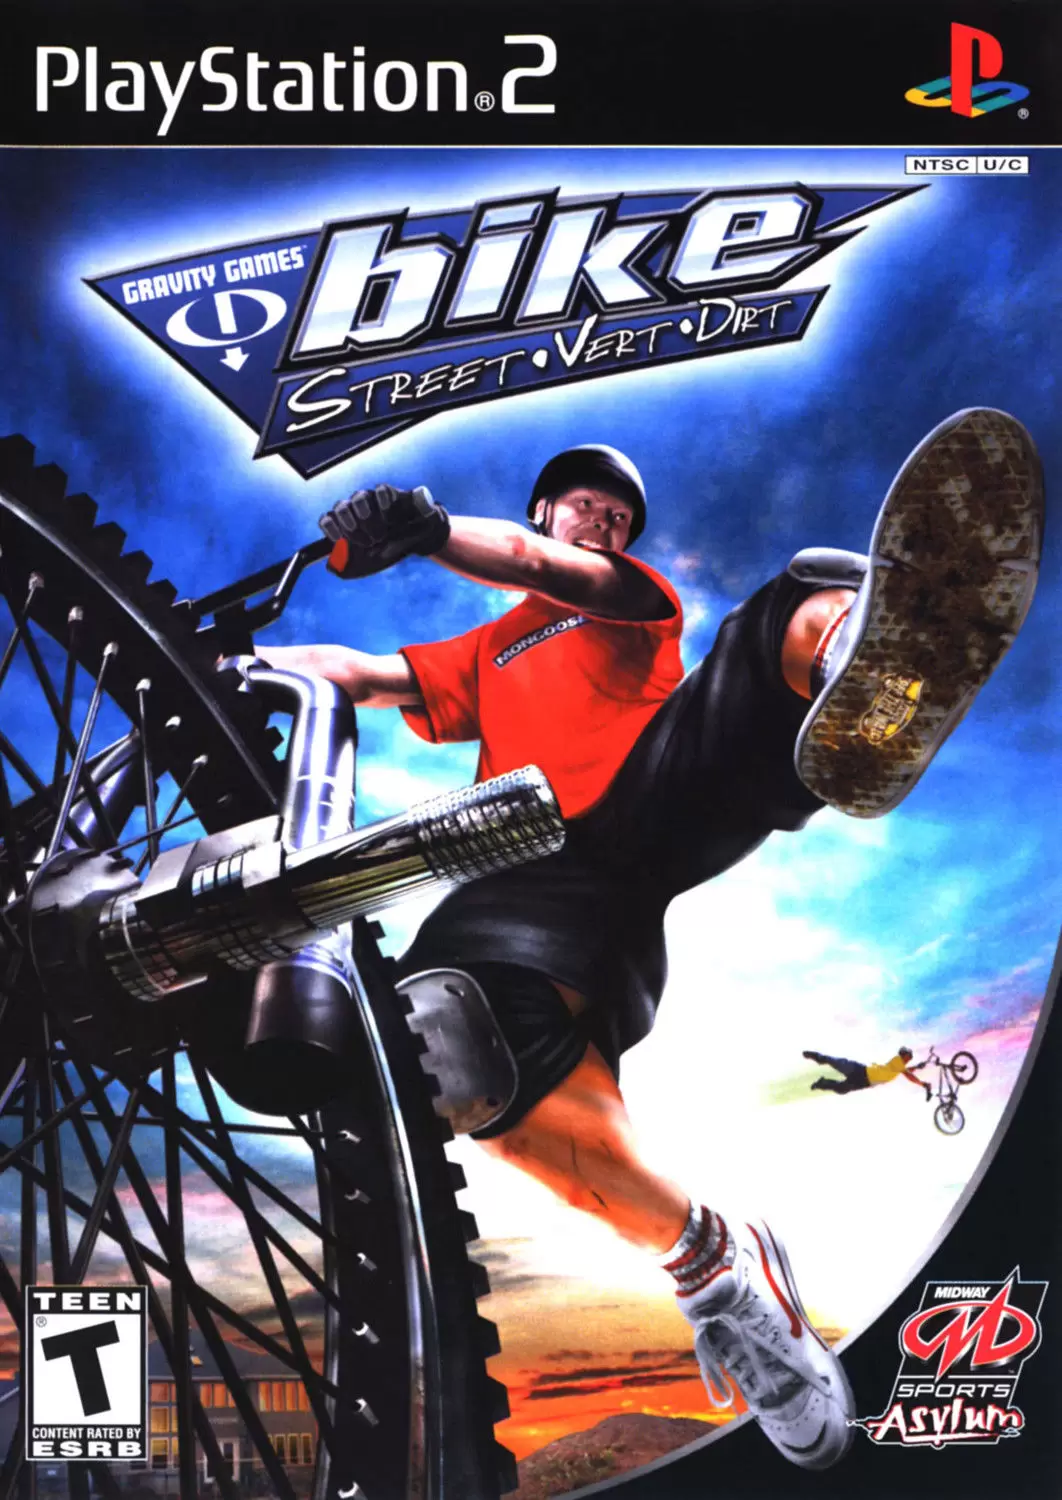 Jeux PS2 - Gravity Games Bike: Street Vert Dirt